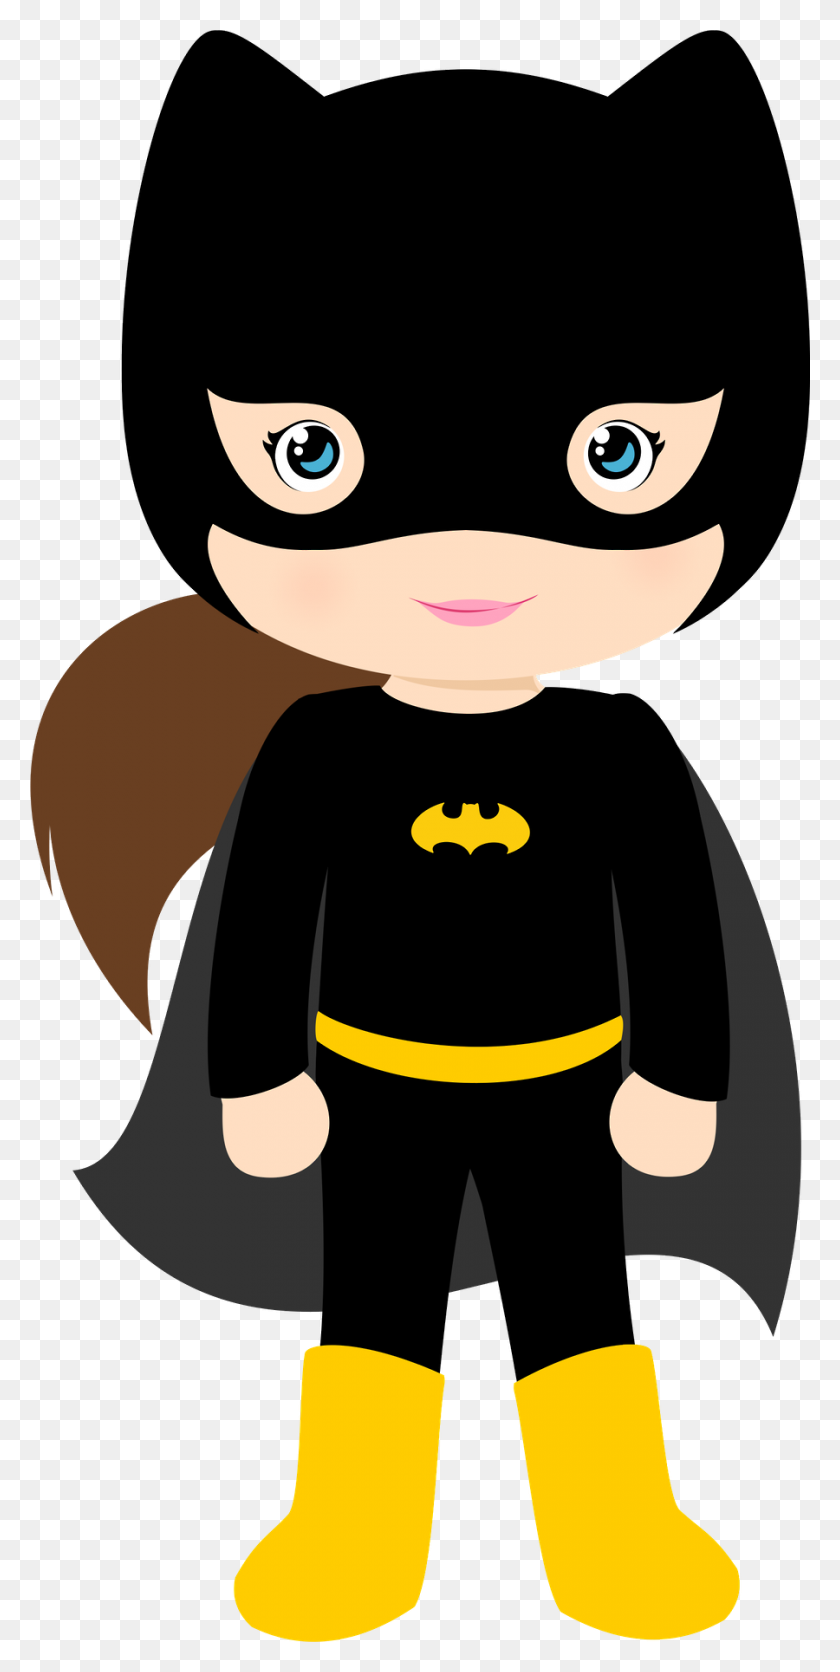 900x1860 Superhero Silhouette Clipart Batgirl - Superhero Silhouette Clip Art